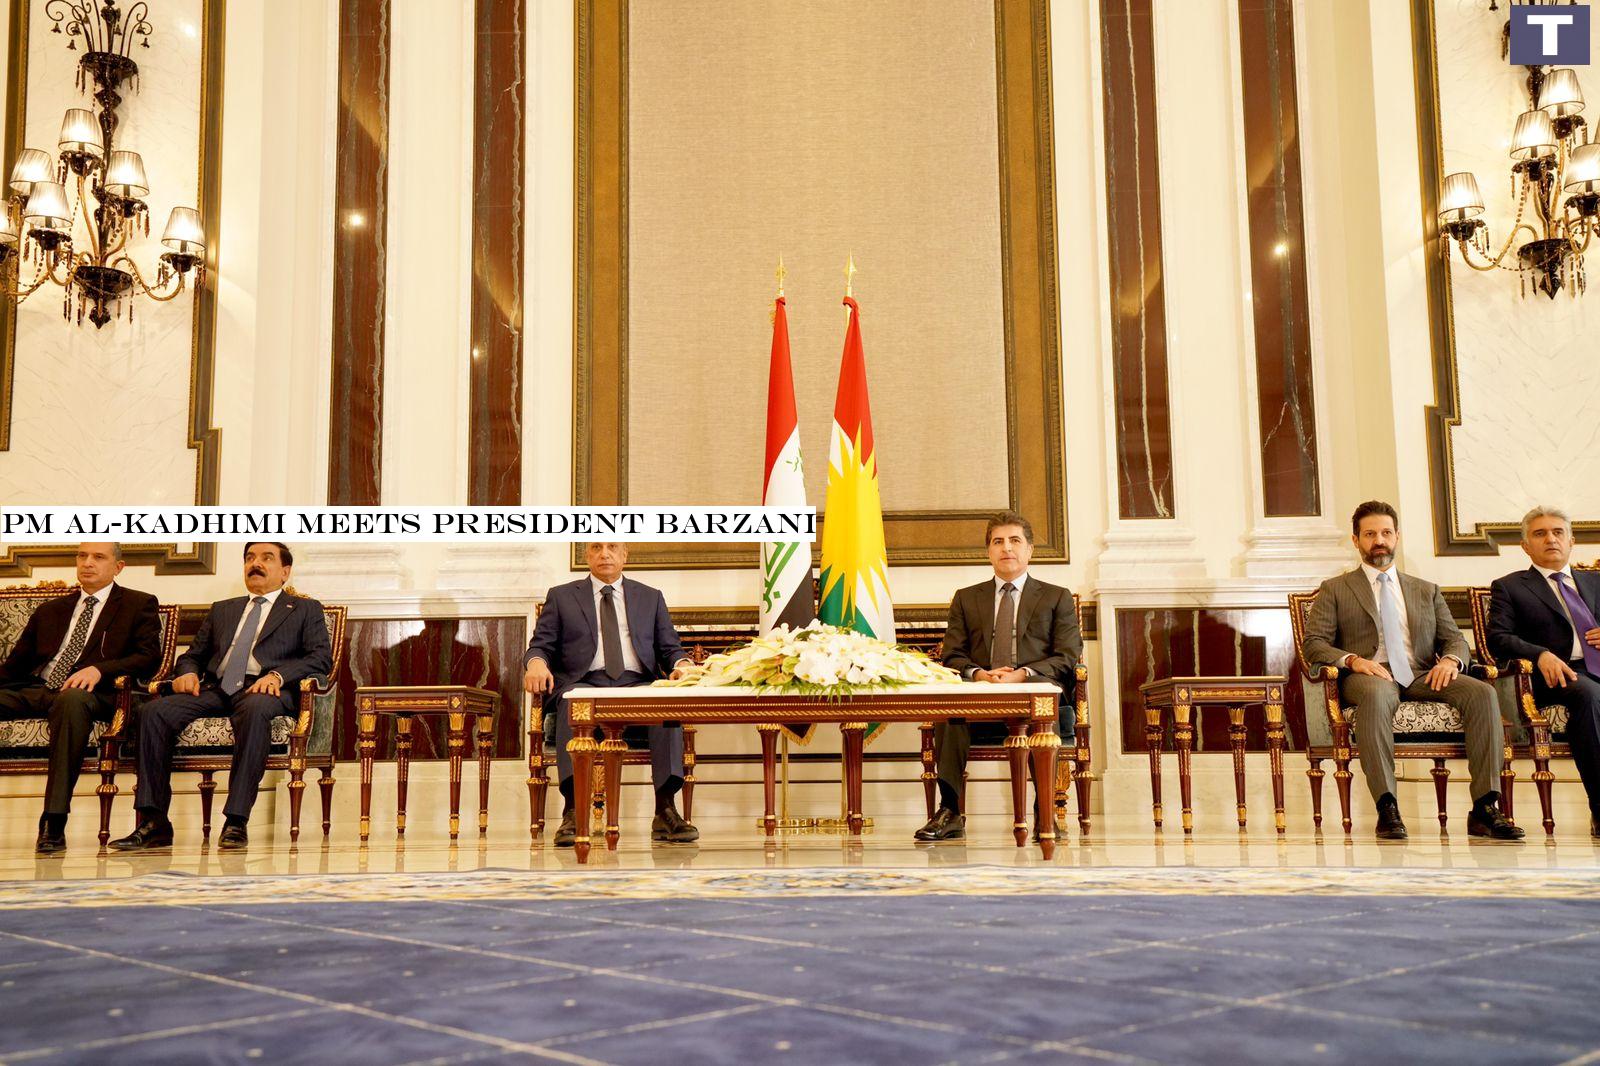 PM al-Kadhimi meets President Barzani